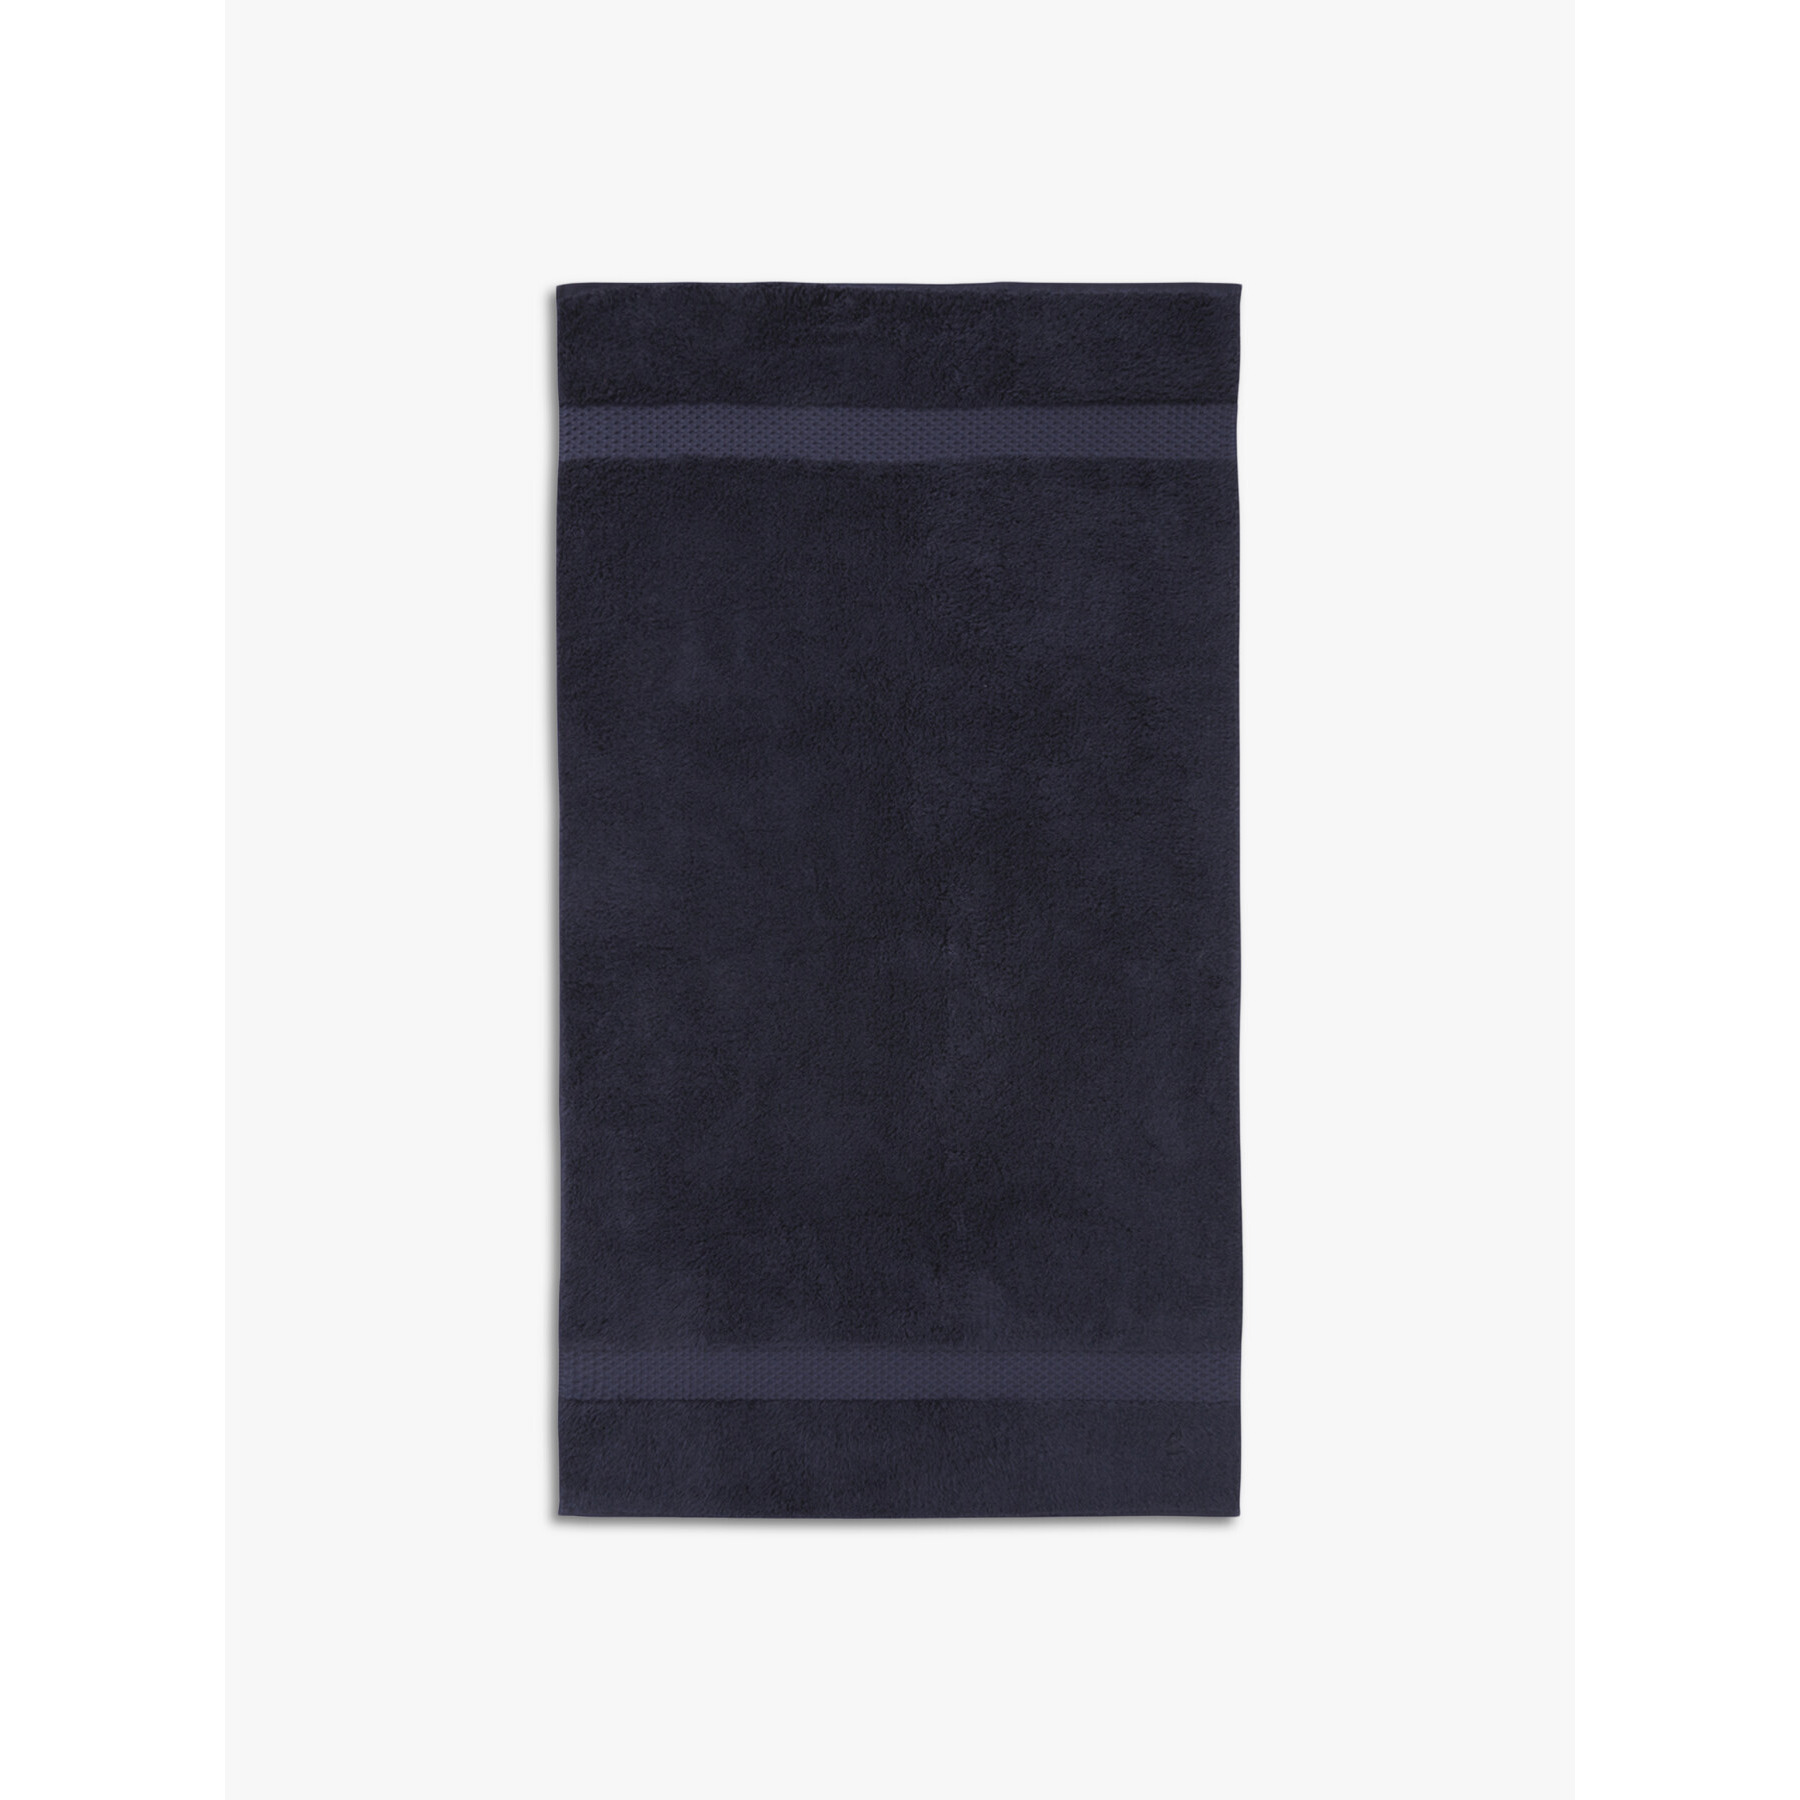 Yves Delorme Etoile Hand Towel Blue - image 1